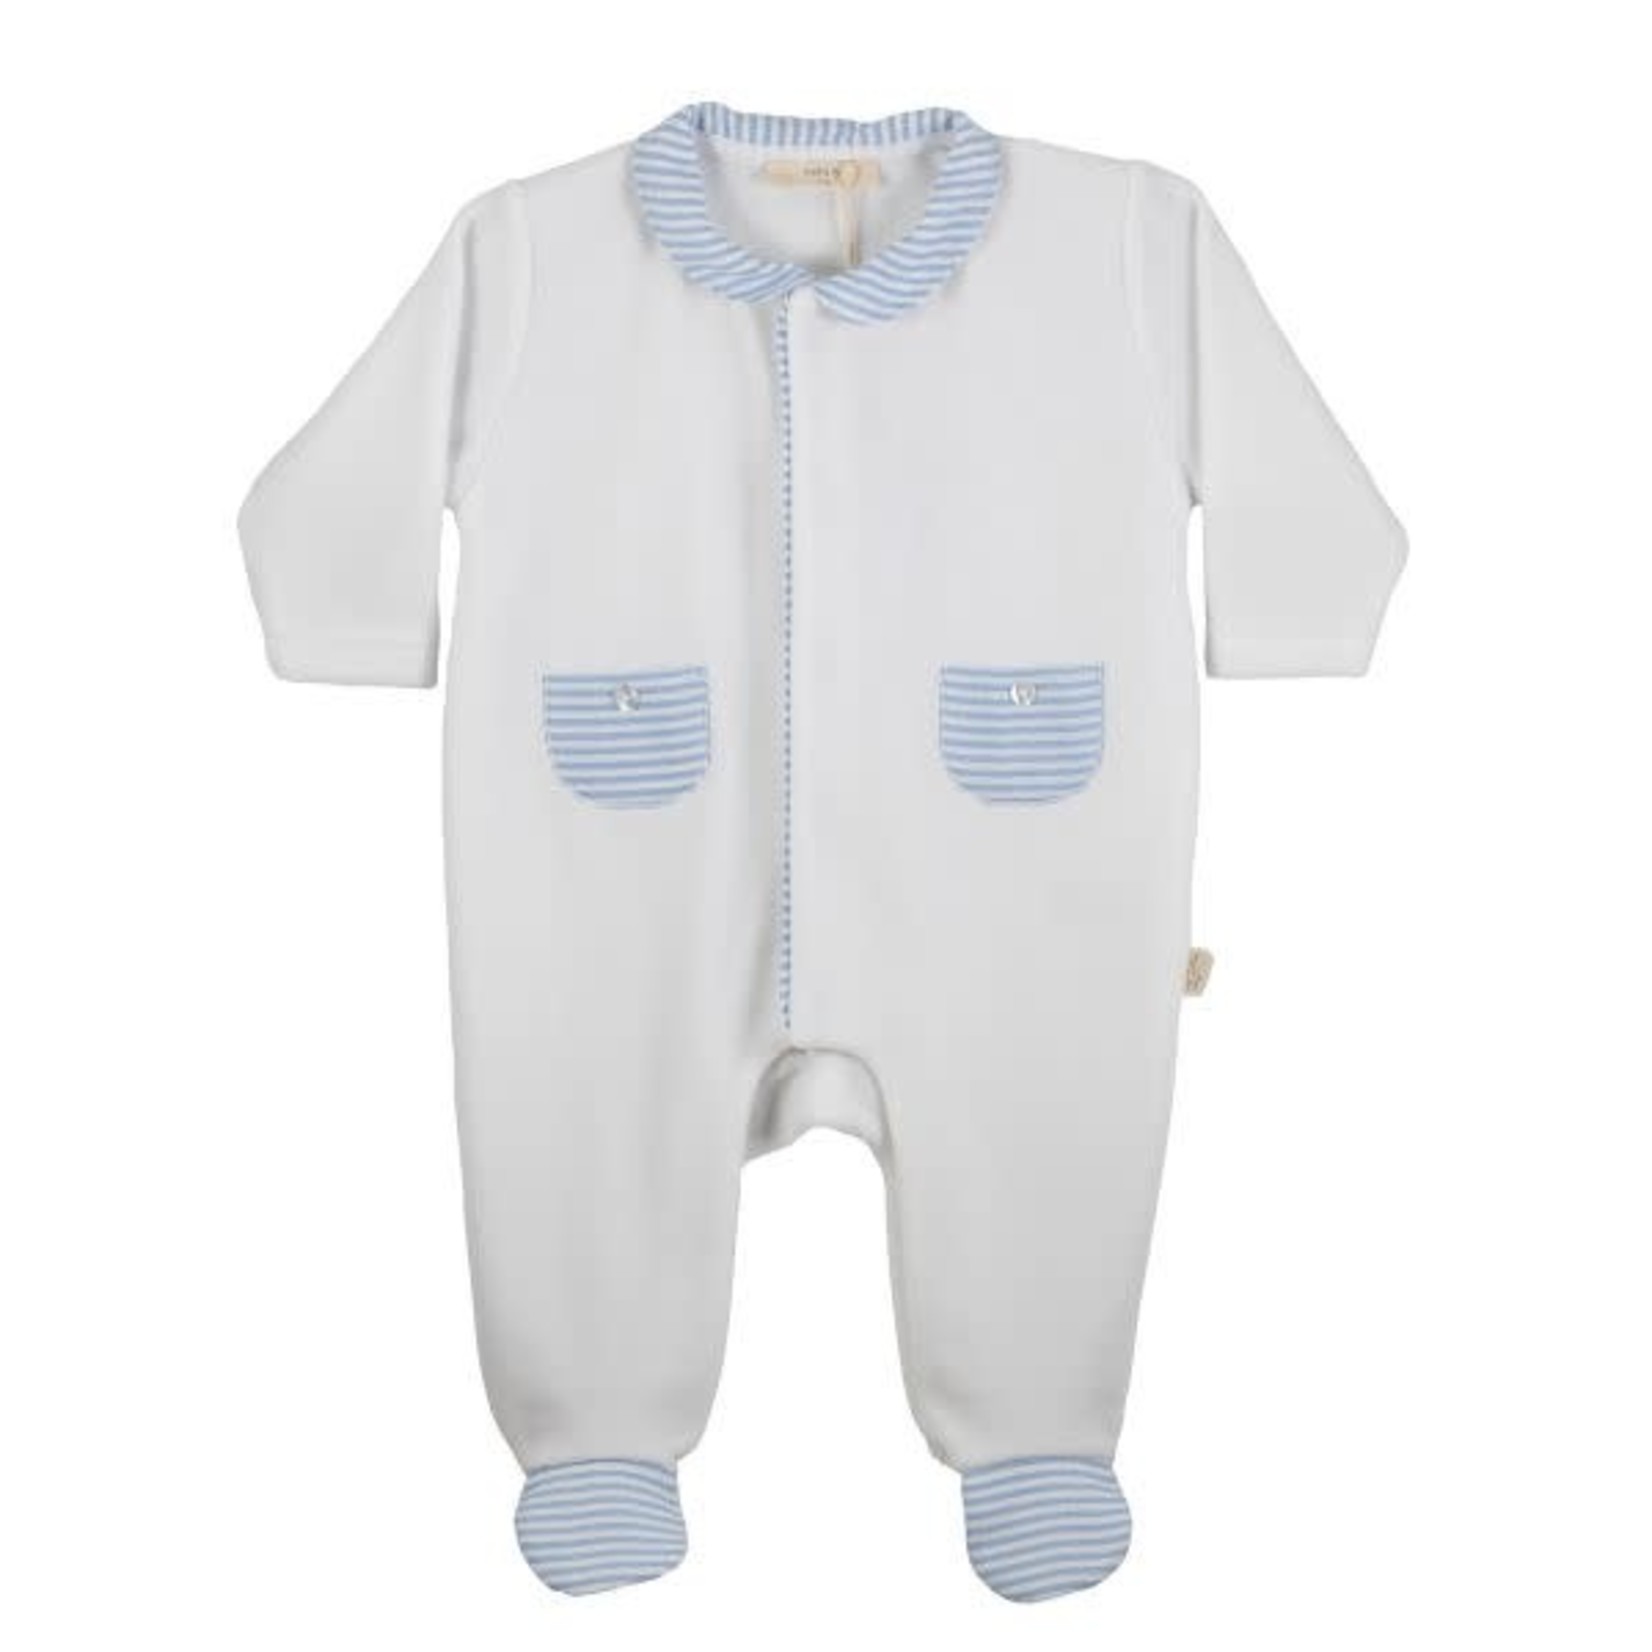 Baby Gi Baby Gi - Wit velours babypakje met borstzakje blauw/wit